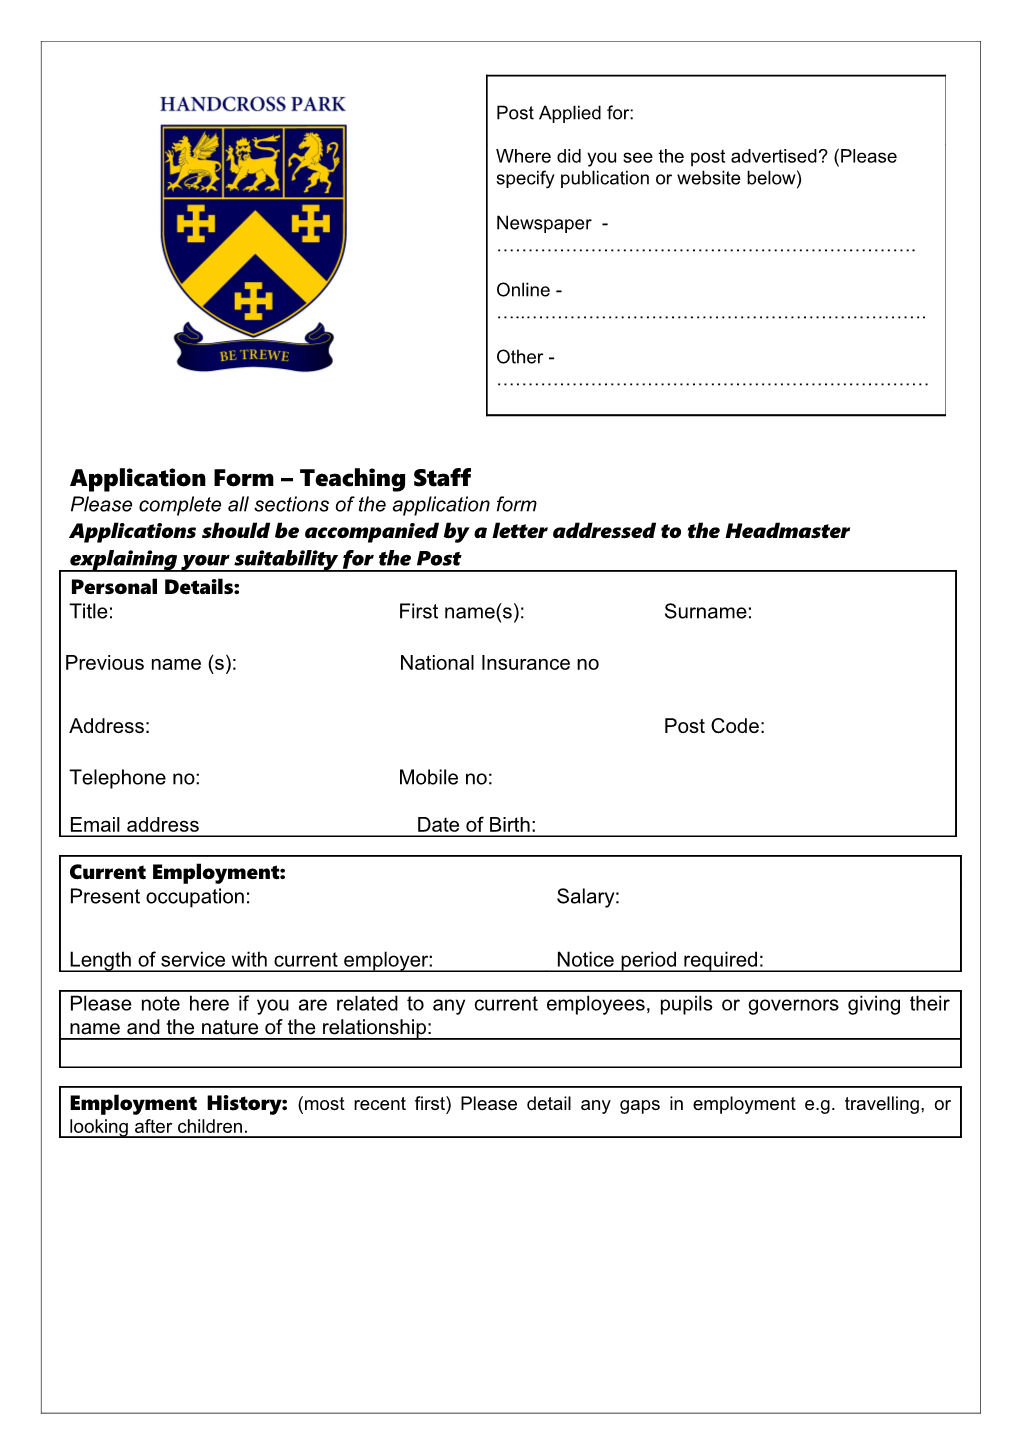 Application Form Teaching Staff